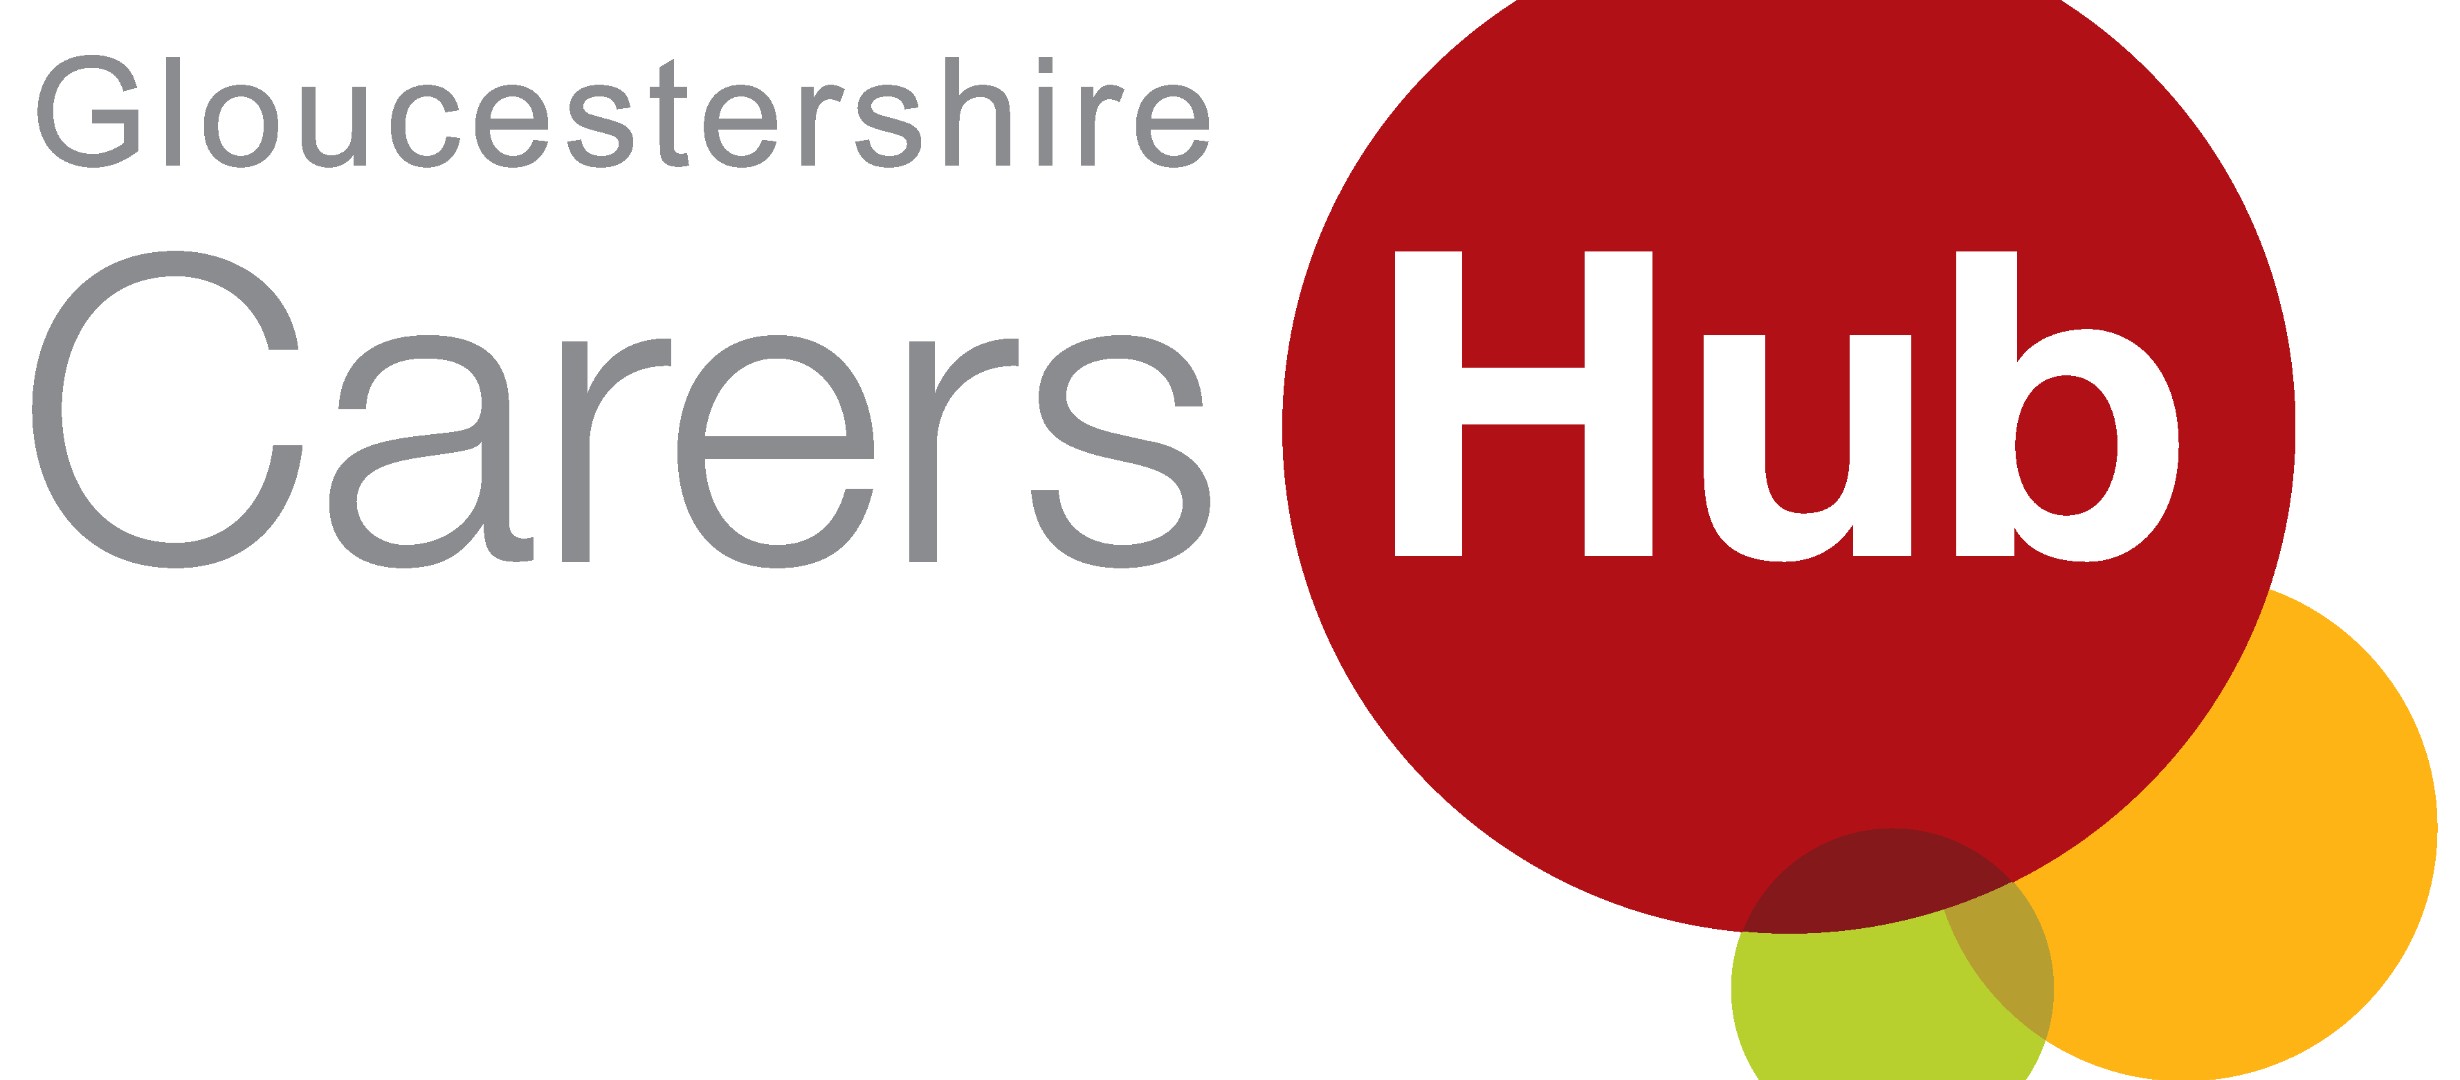 Gloucestershire Carers Hub logo